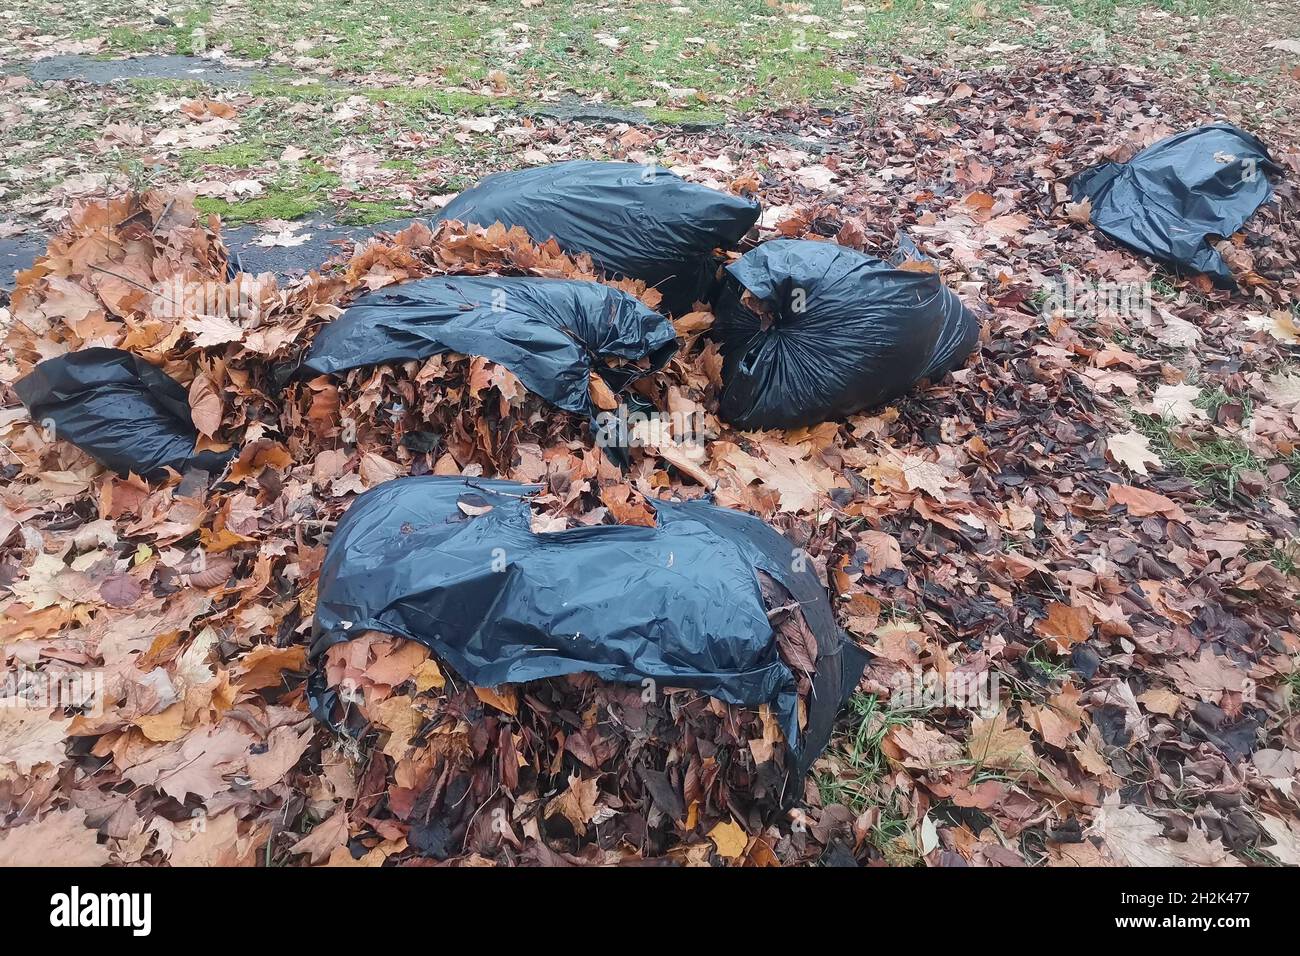 Autumn foliage in plastic trash bags. Stock Photo